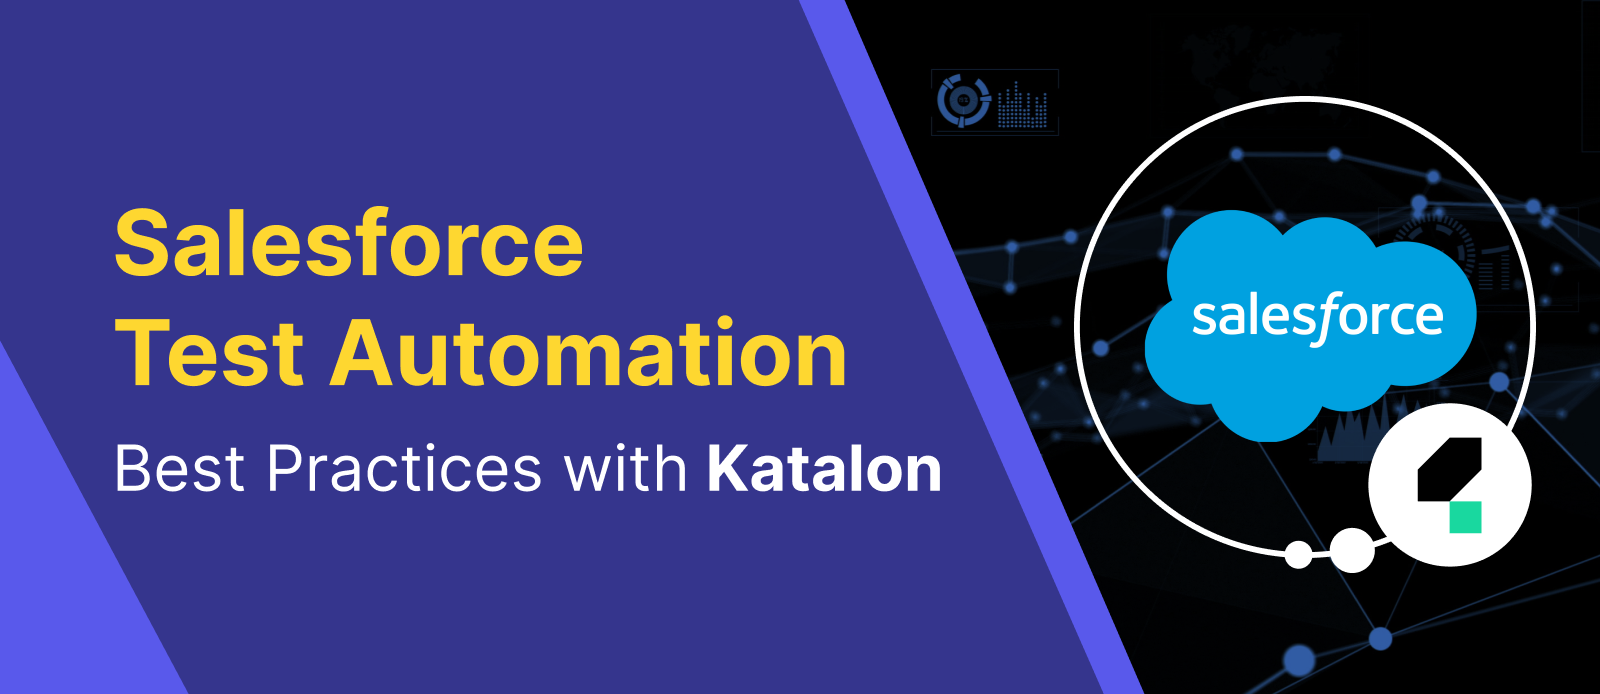 Salesforce Test Automation: Best Practices with Katalon